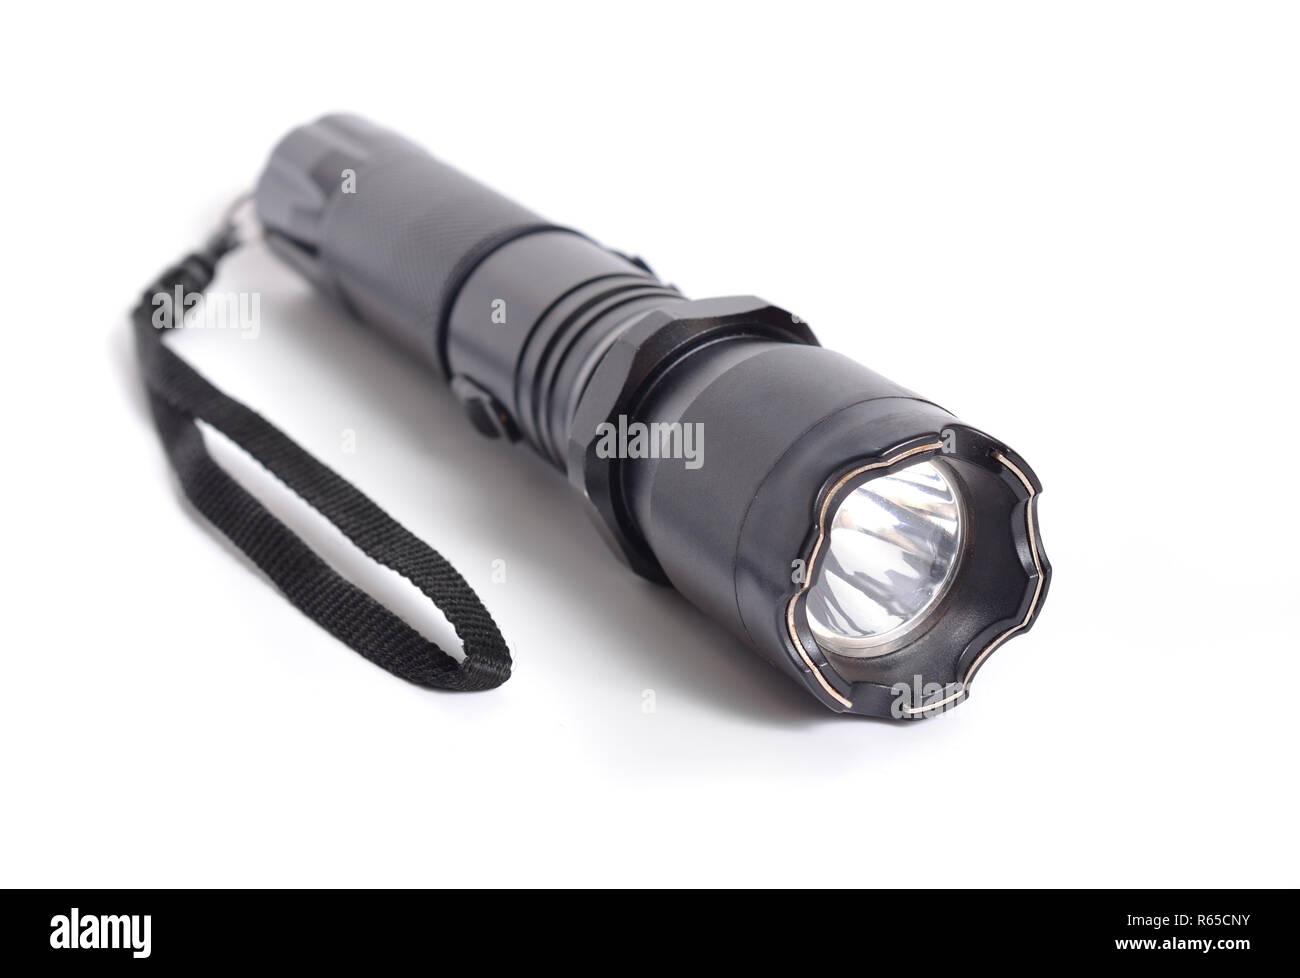 Shocker, Taser, Means of self-defense. Flashlight tazer isolated on white background Stock Photo